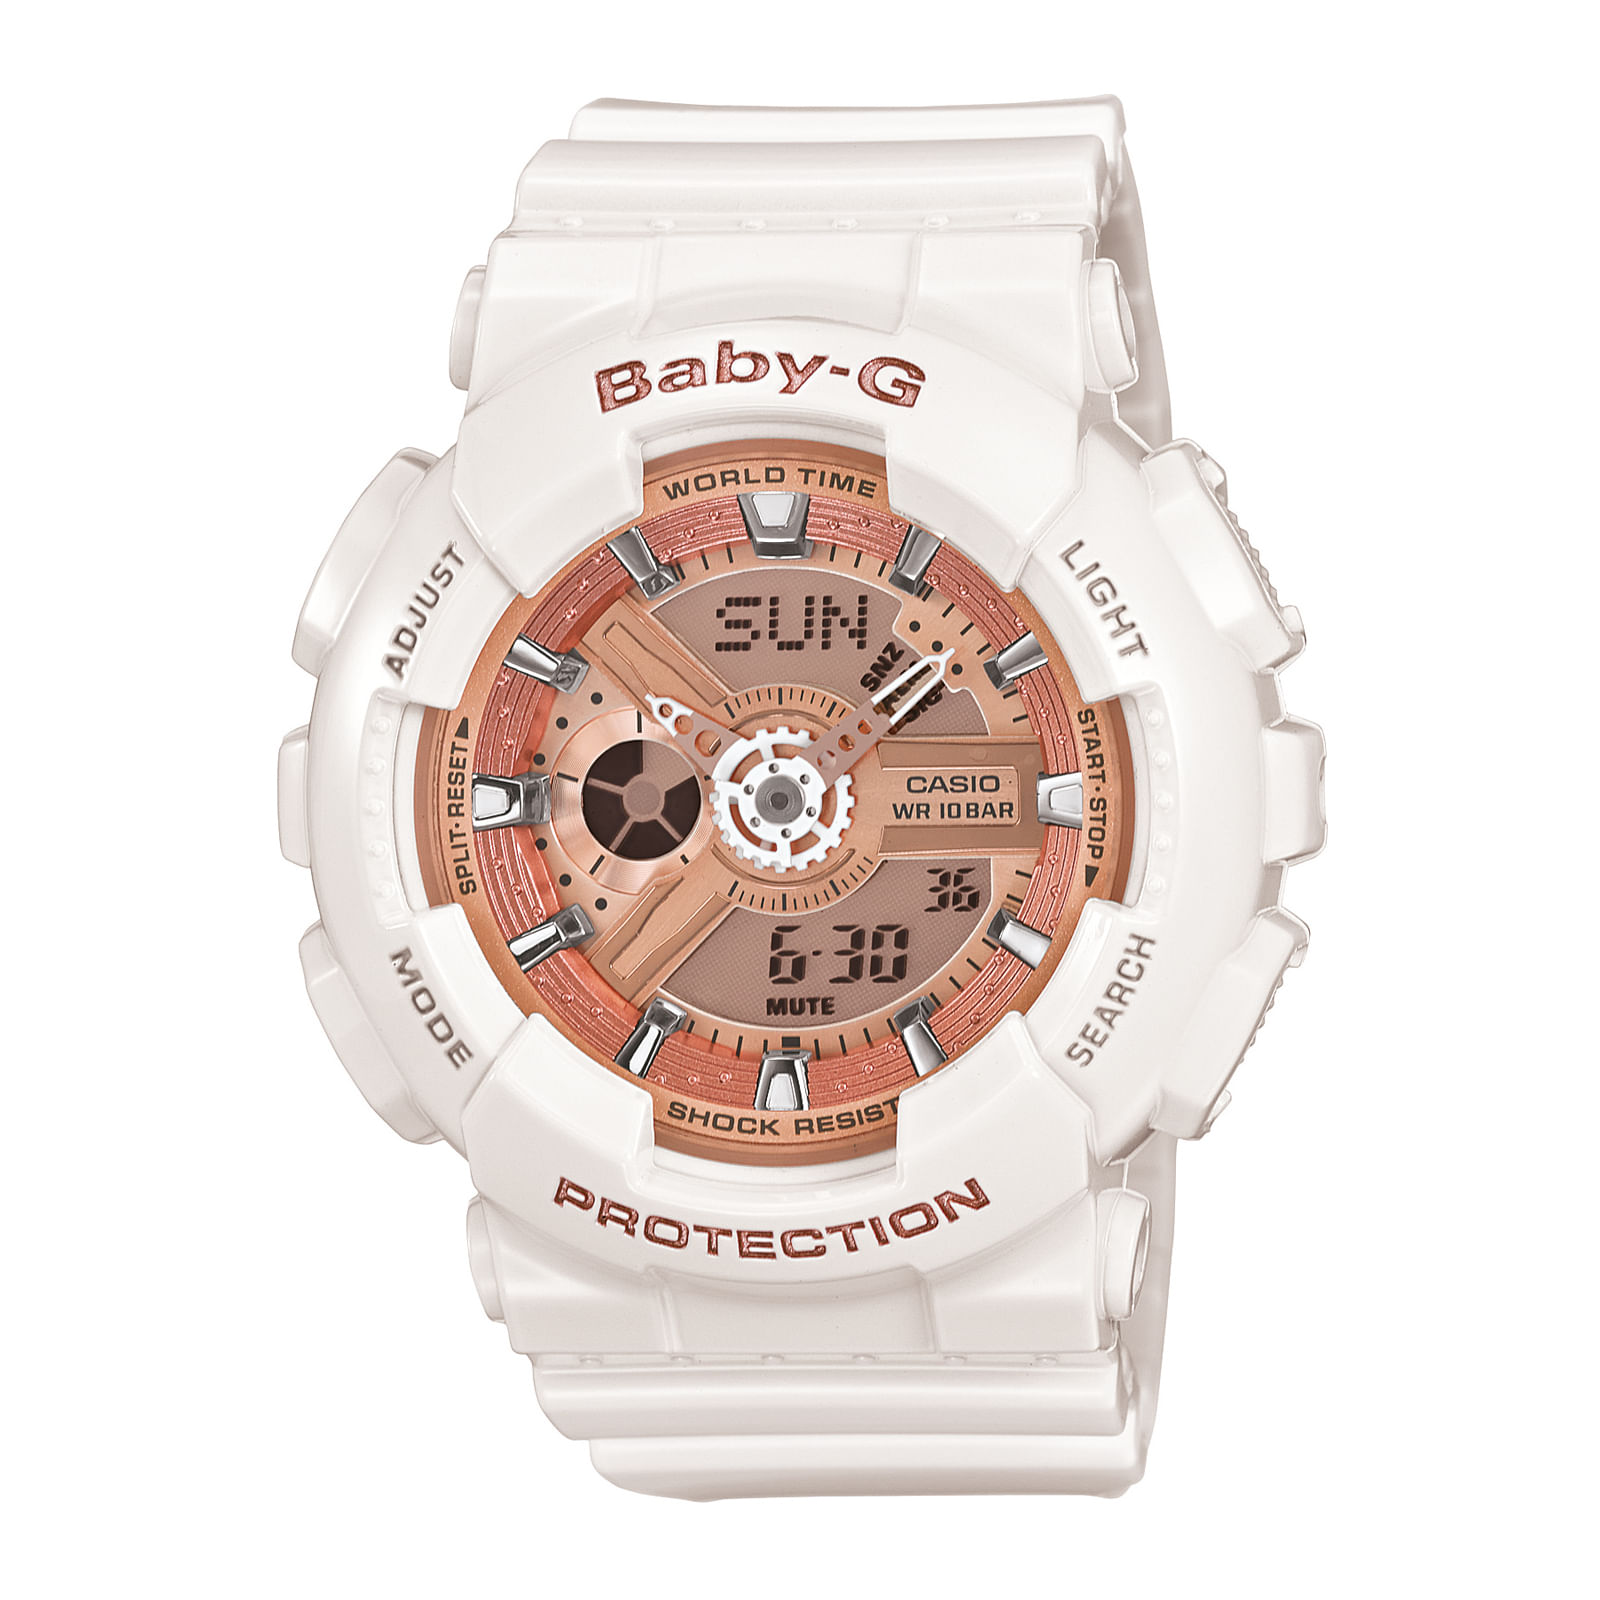 Reloj BABY-G BA-110-7A1 Resina Mujer Blanco